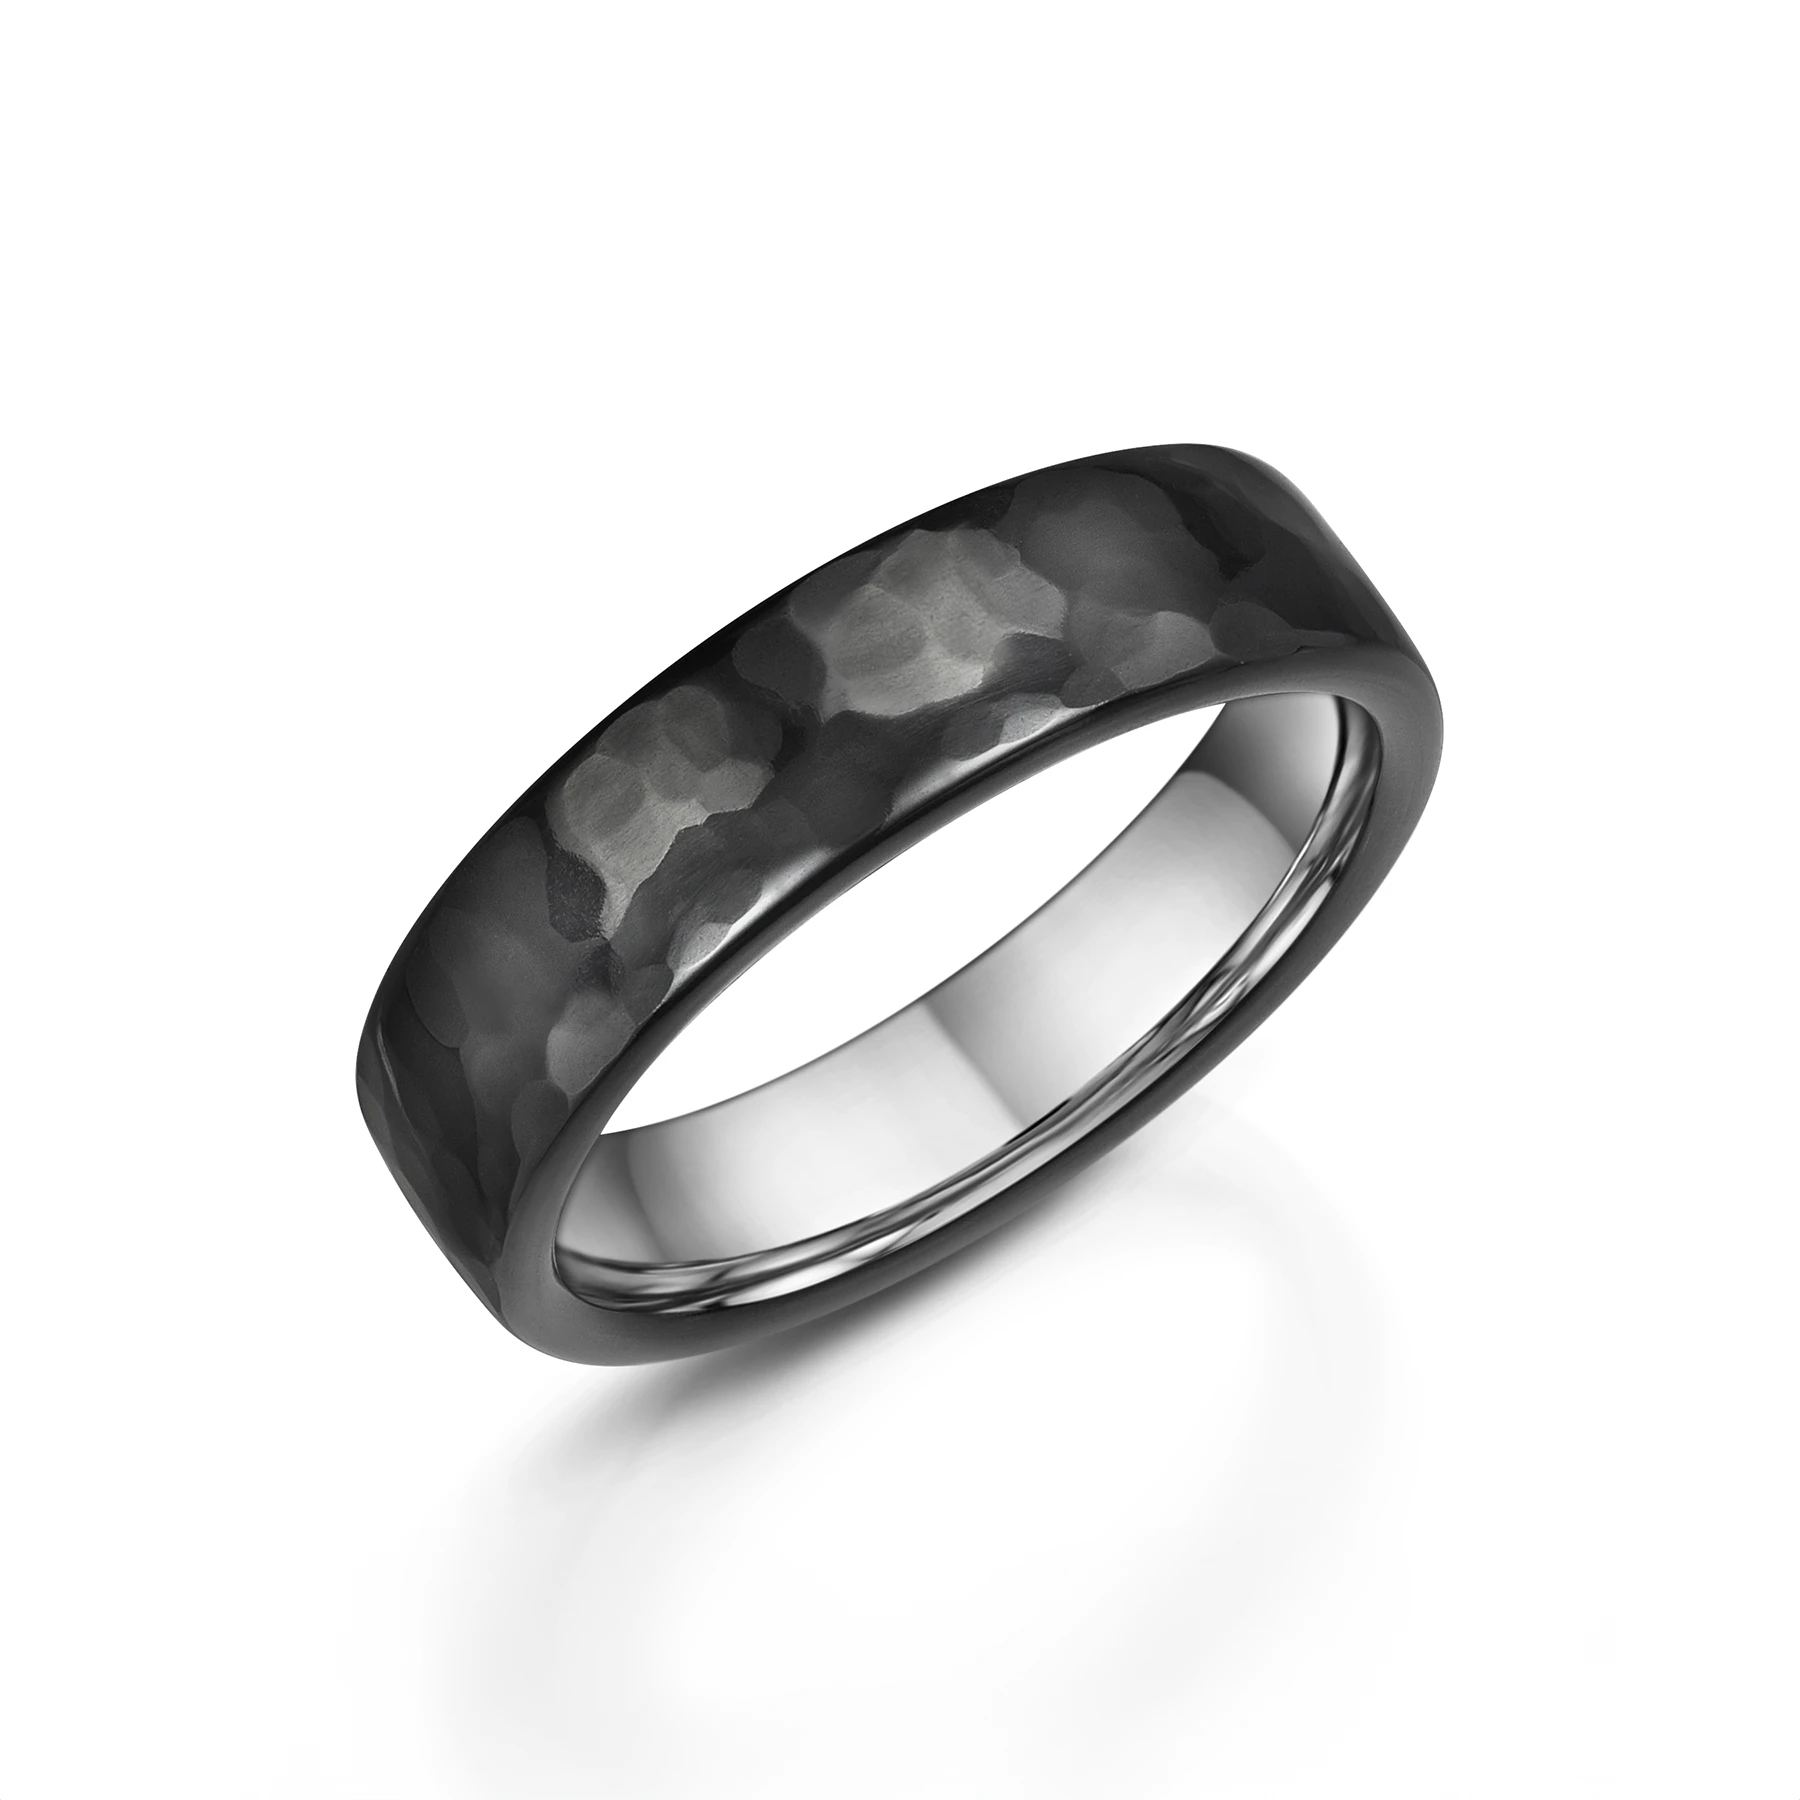 Hammered Black Zirconium Wedding Ring